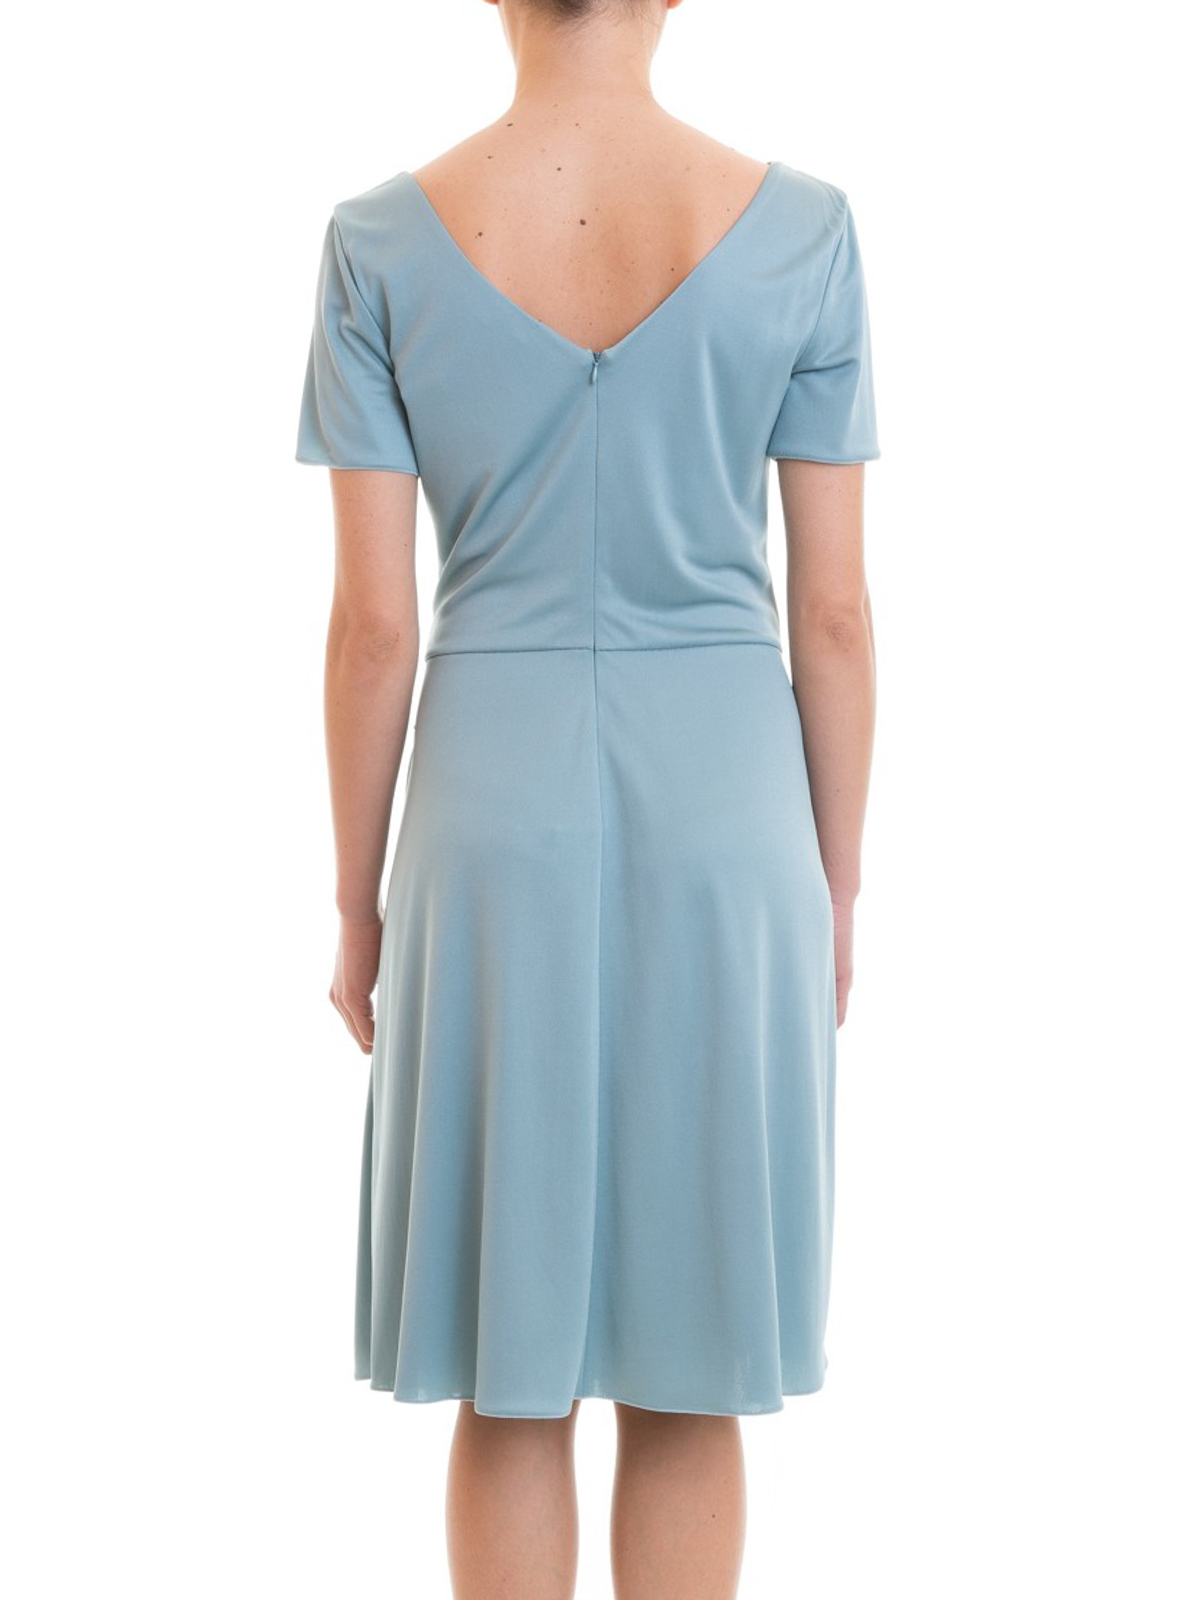 sky blue dress online